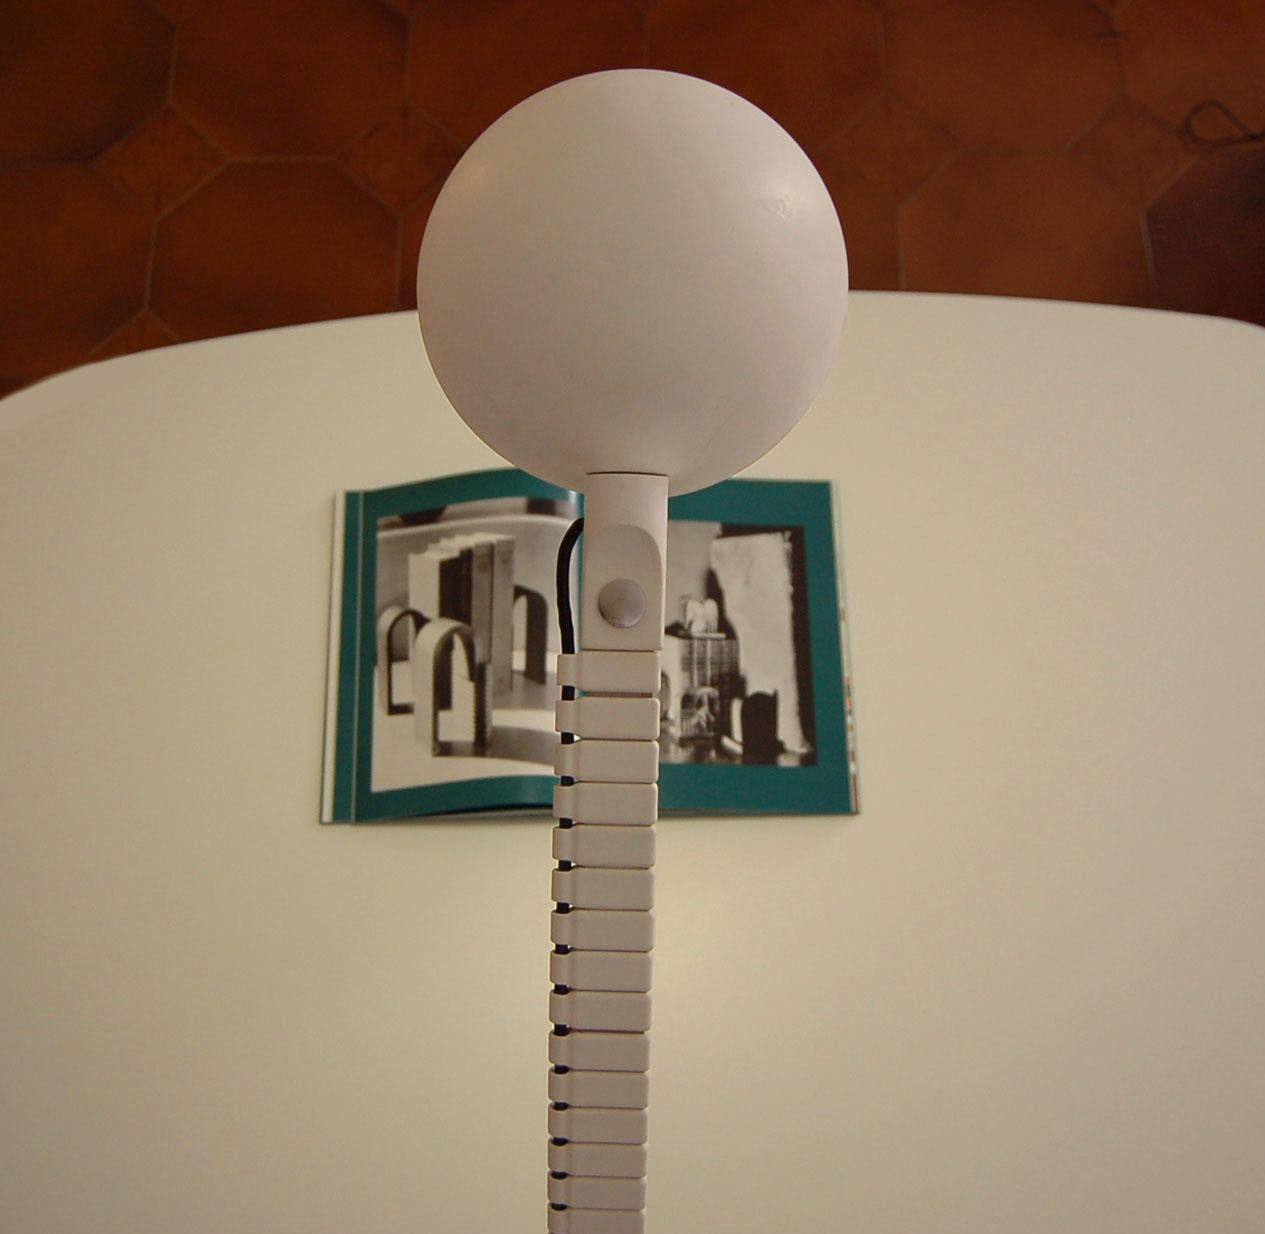 Italian Flex or Vertebra Table Lamp Model 671 by Martinelli Luce 1960s Italy